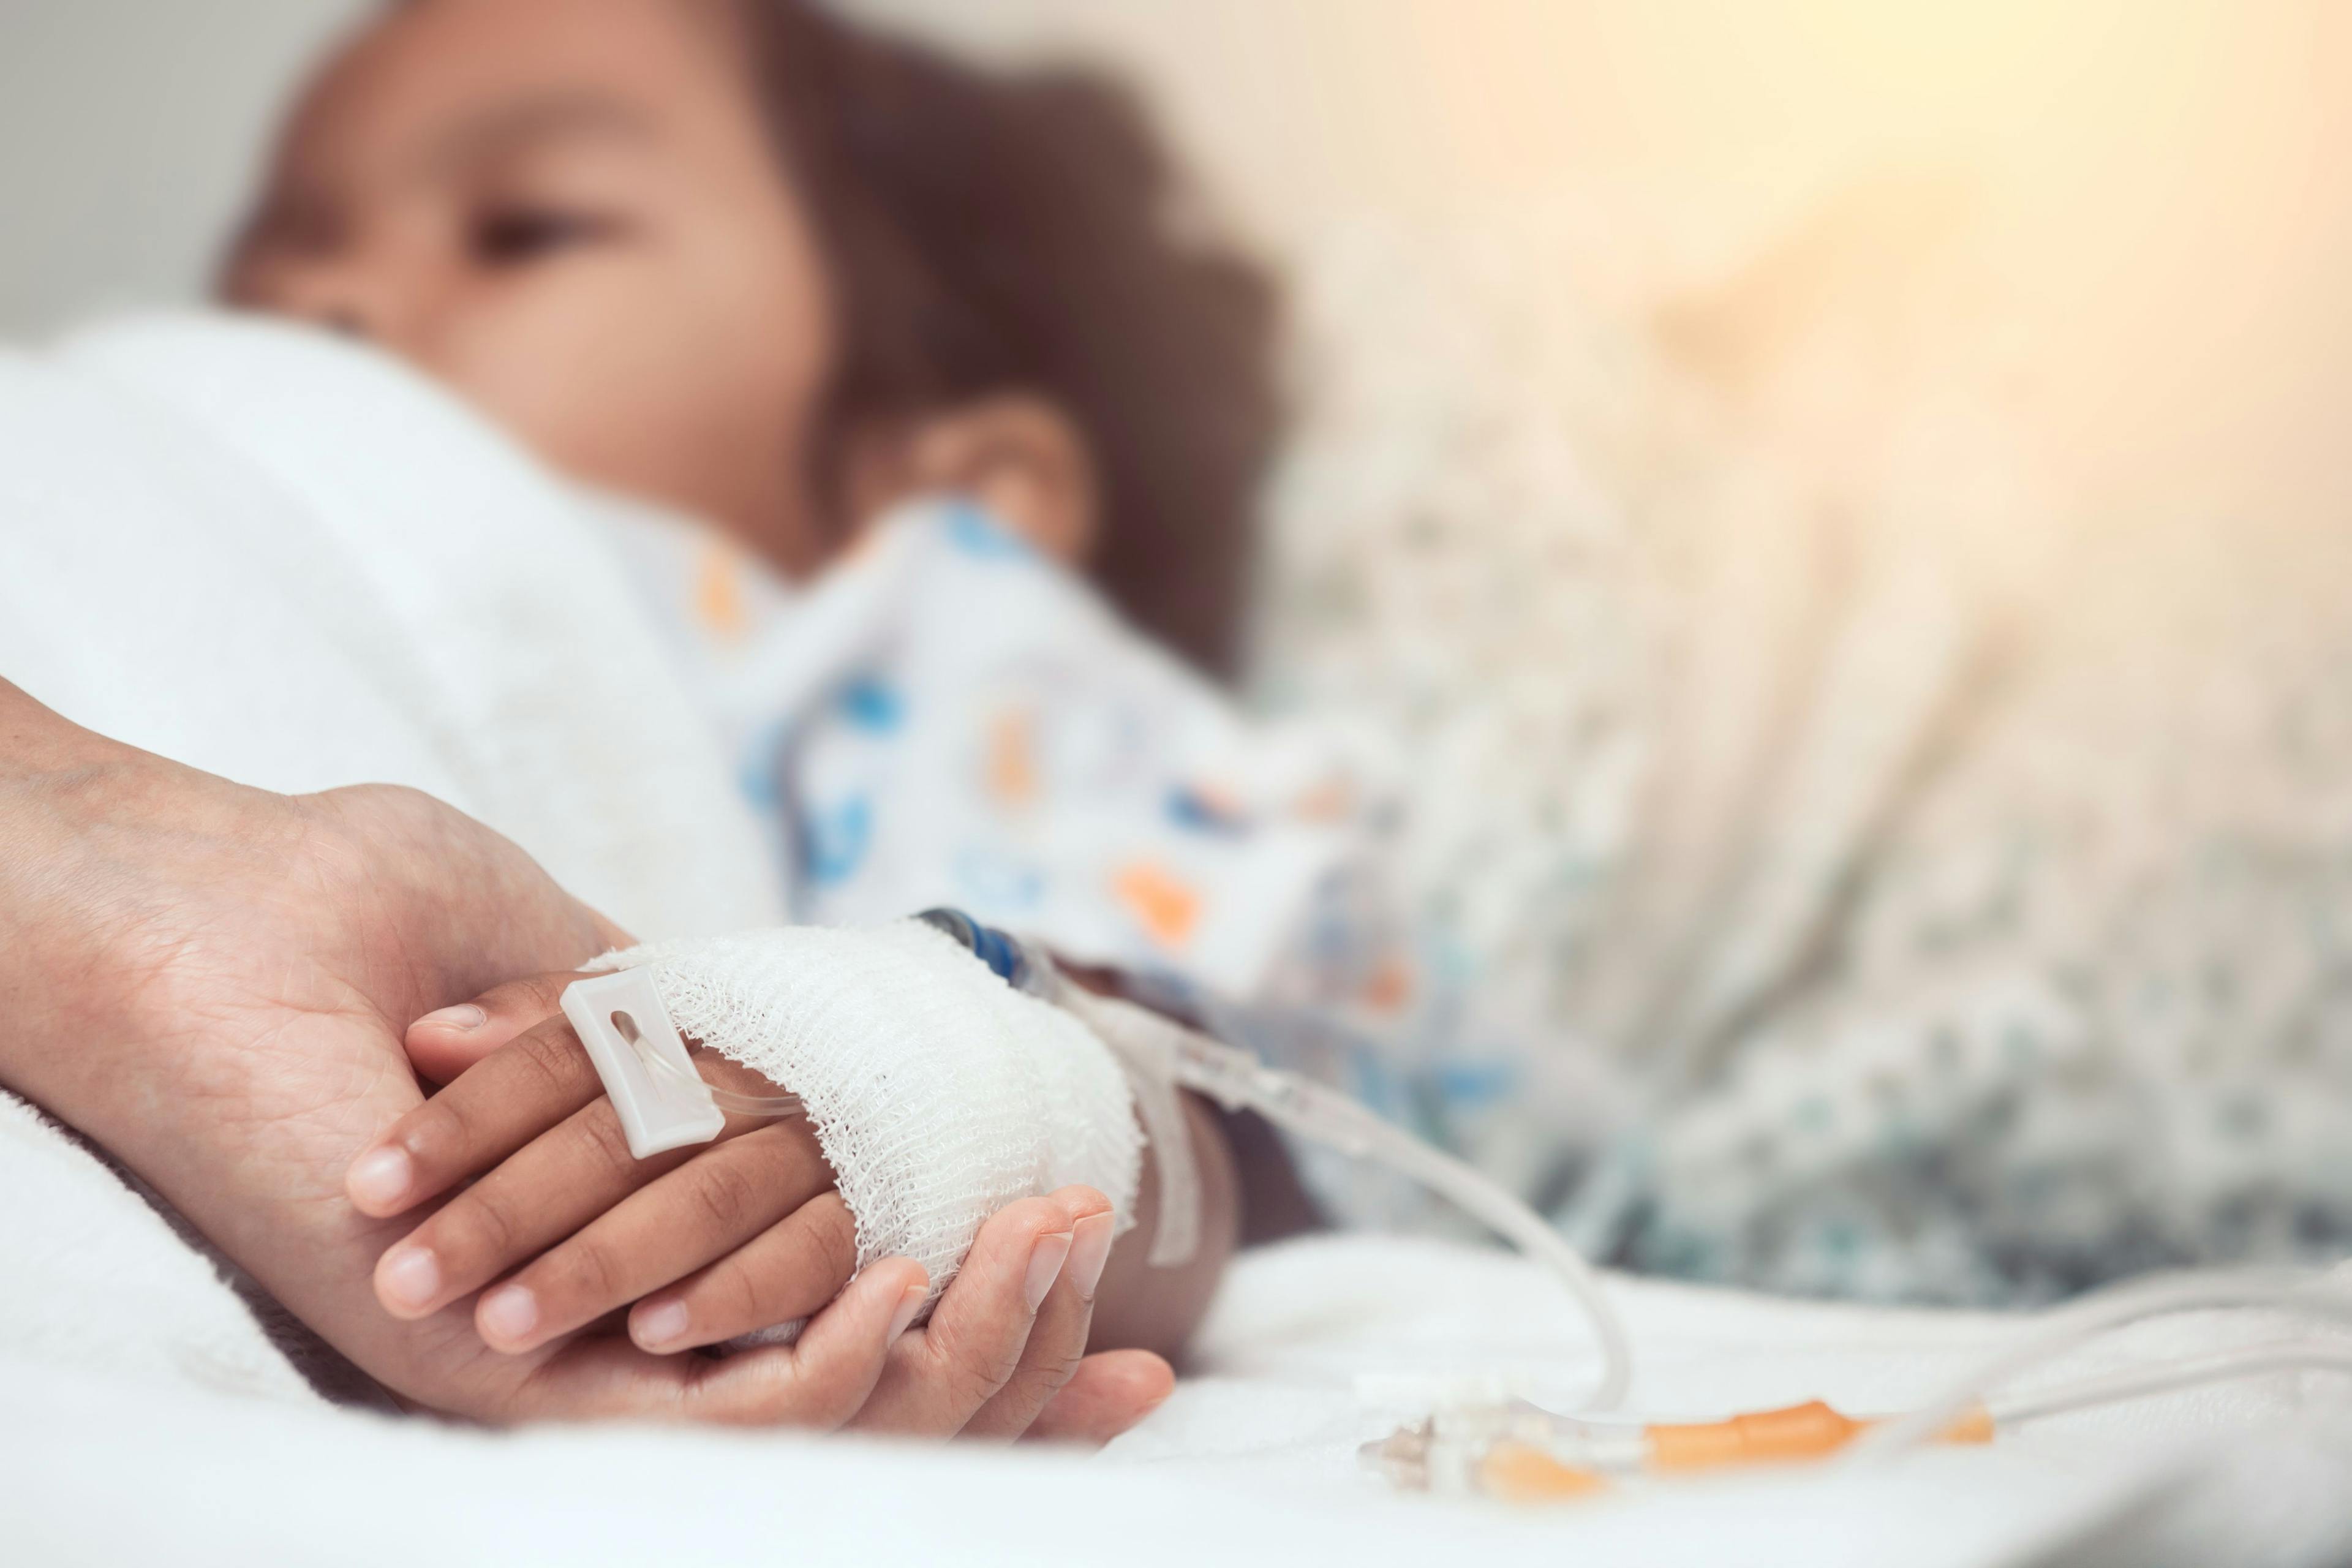 Poverty increases risk of COVID-19 hospitalization in children